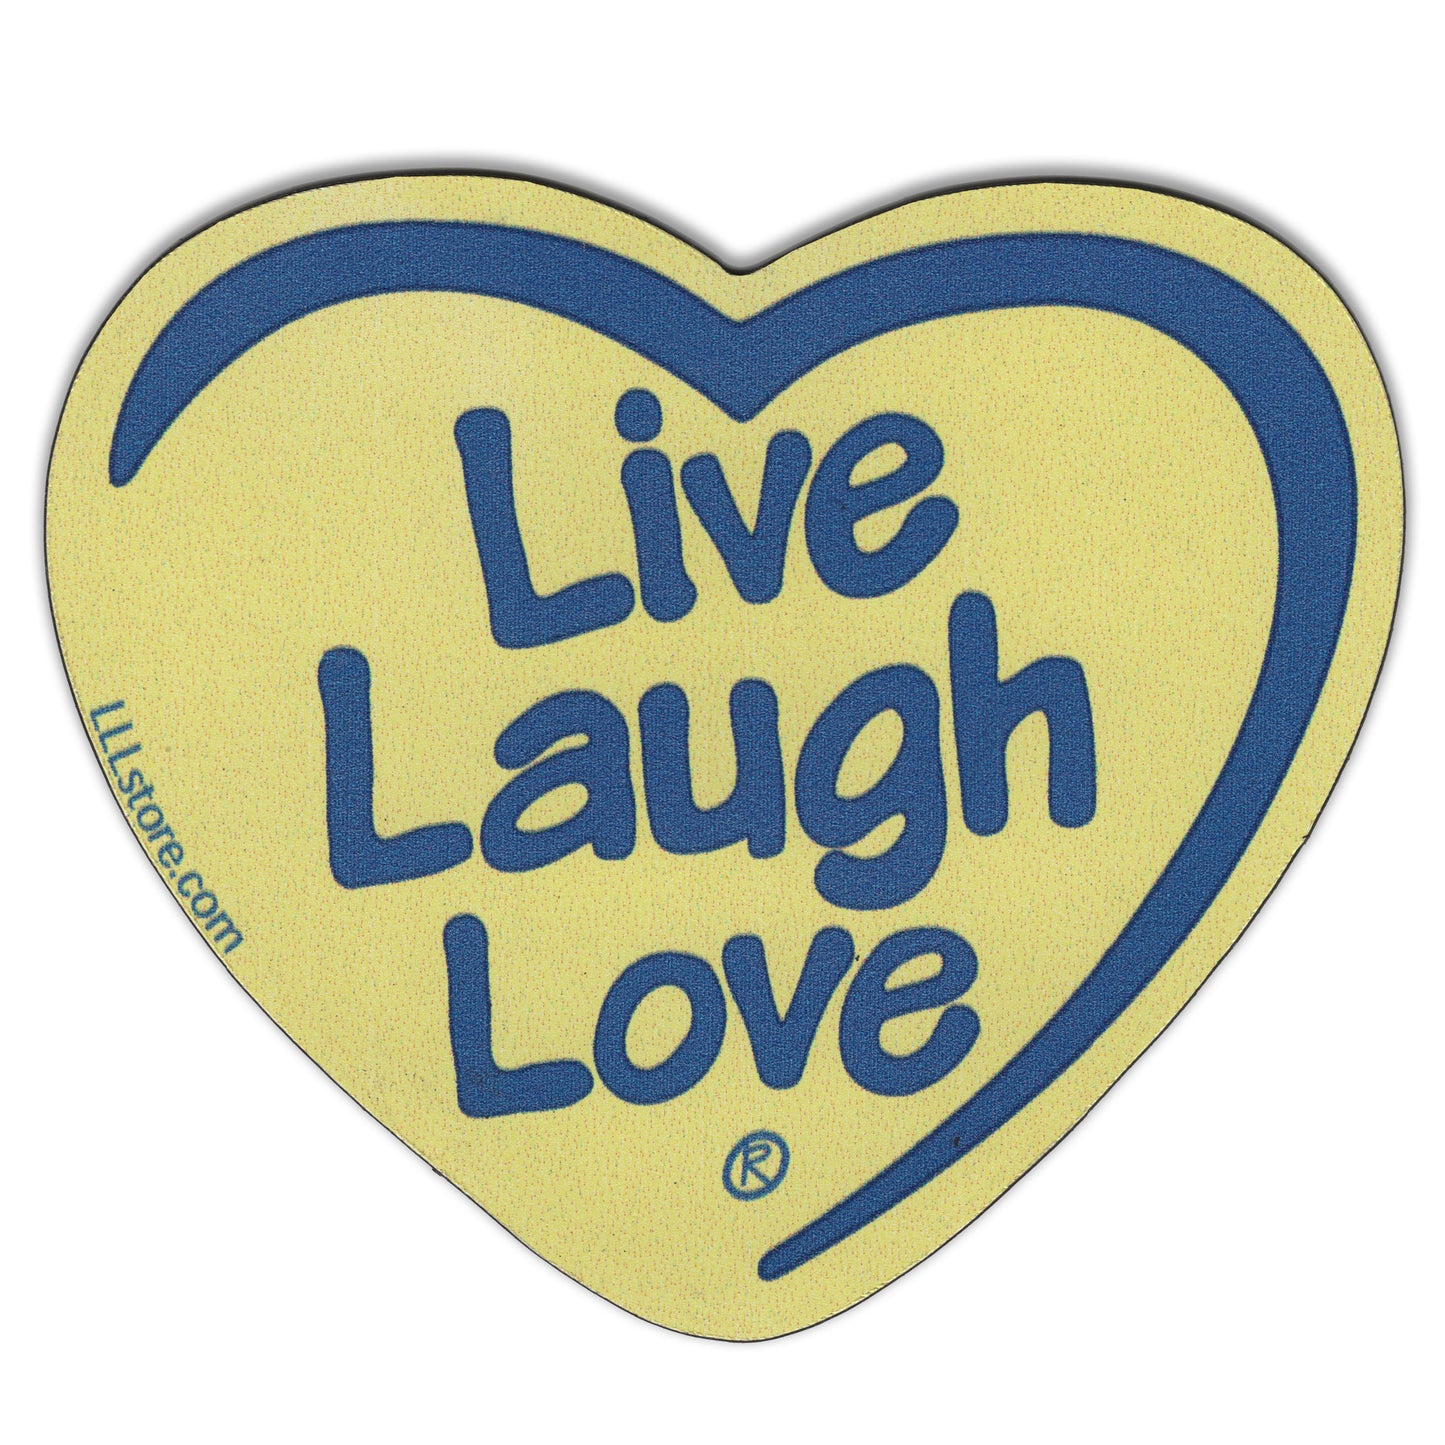 Live Laugh Love® Decorative Heart Shape Message Magnet - Blue on Yellow